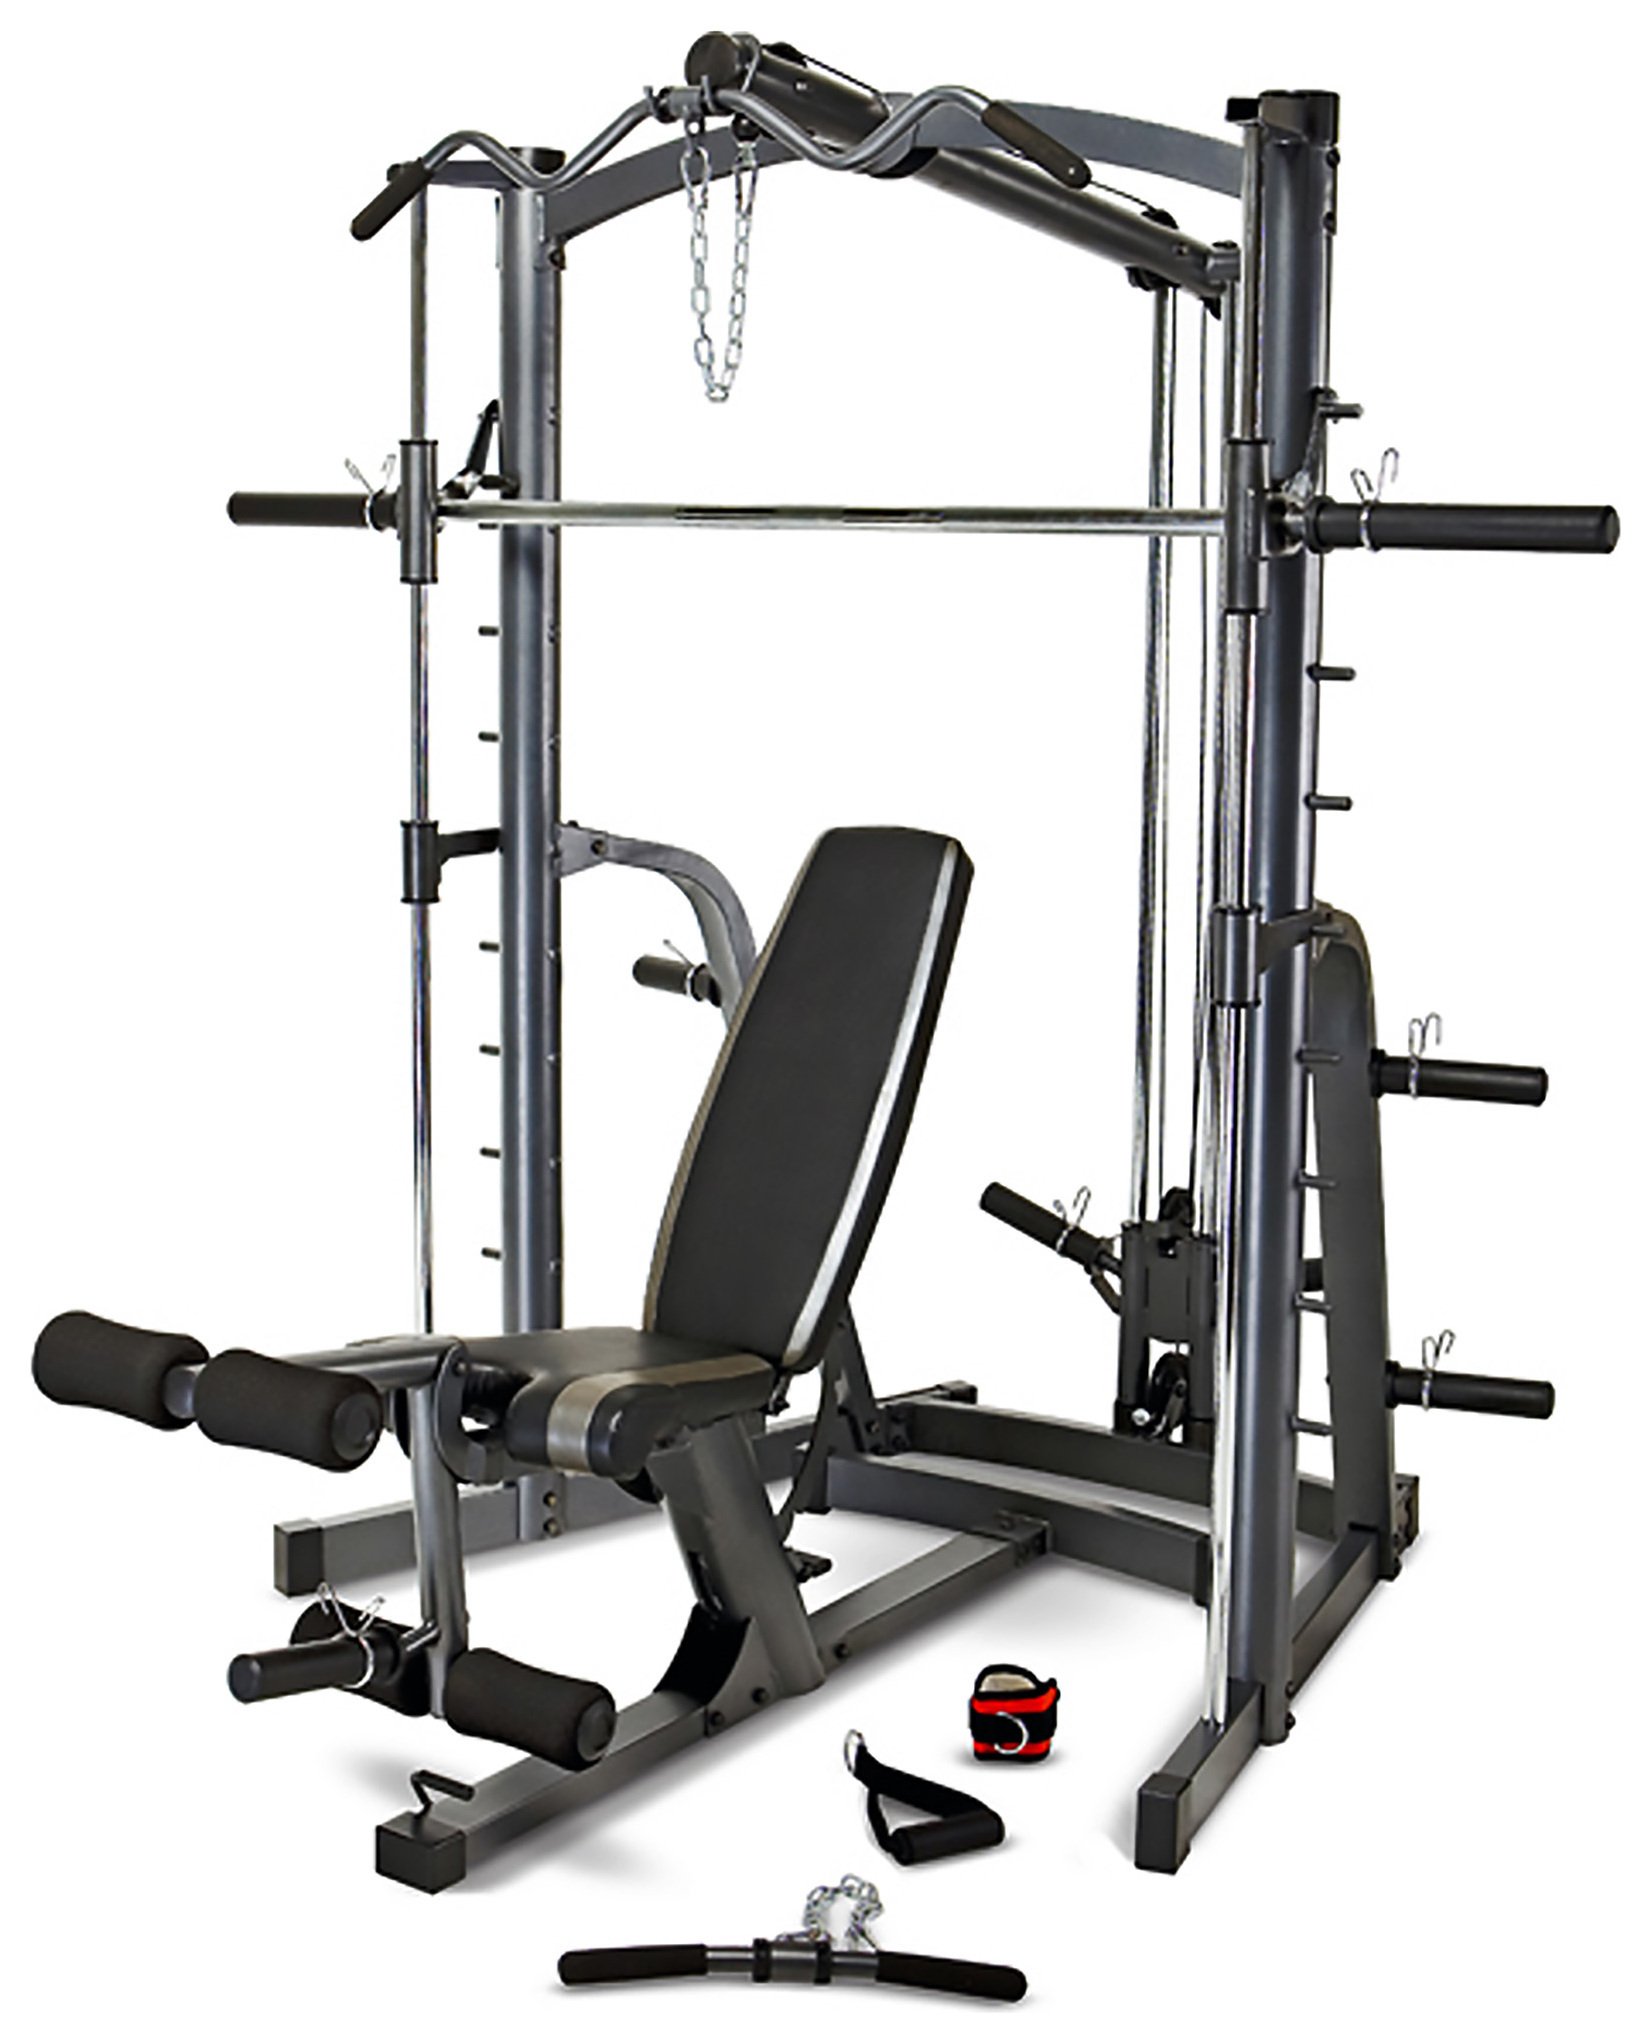 Marcy MWB1282 Home Multi Gym Smith Machine. Review